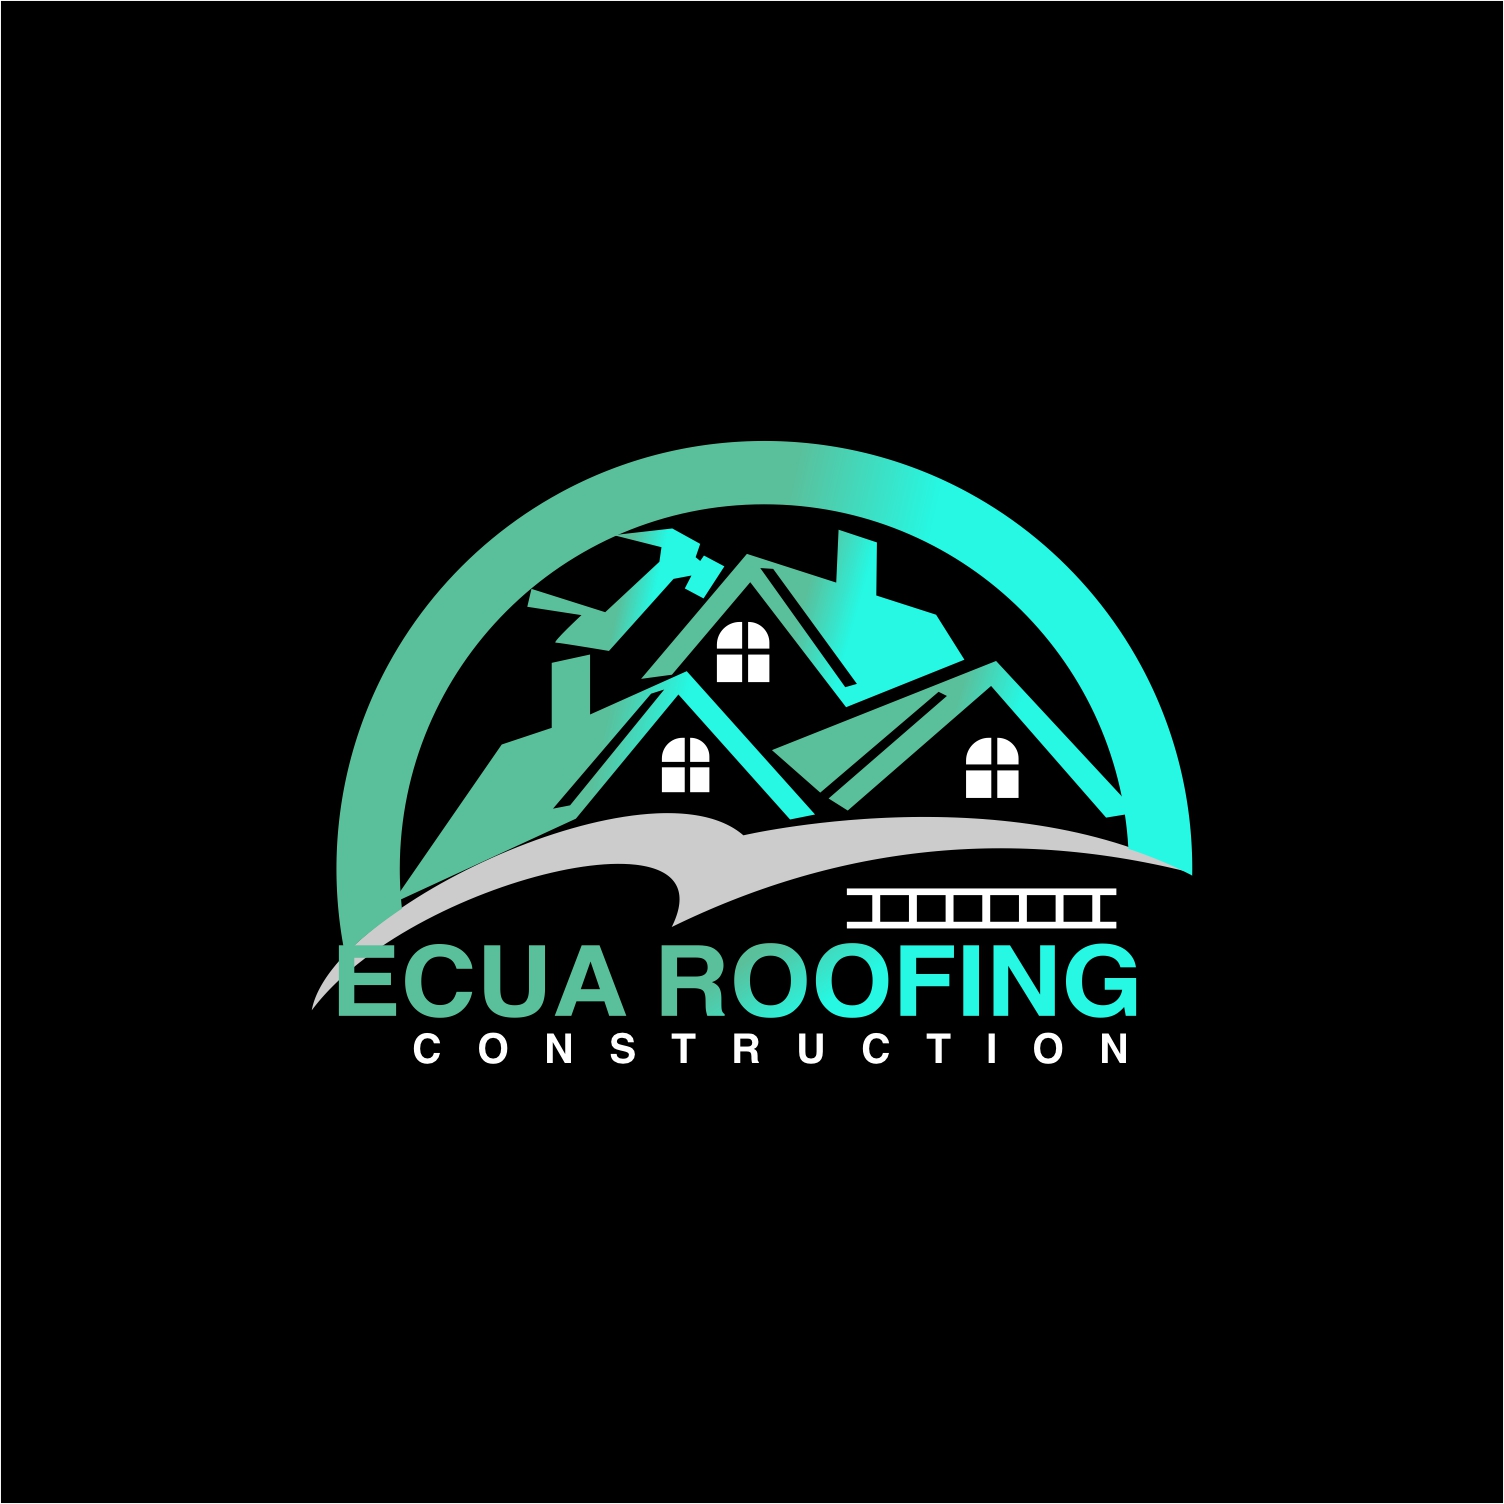 Contact us - ECUA Roofing Construction